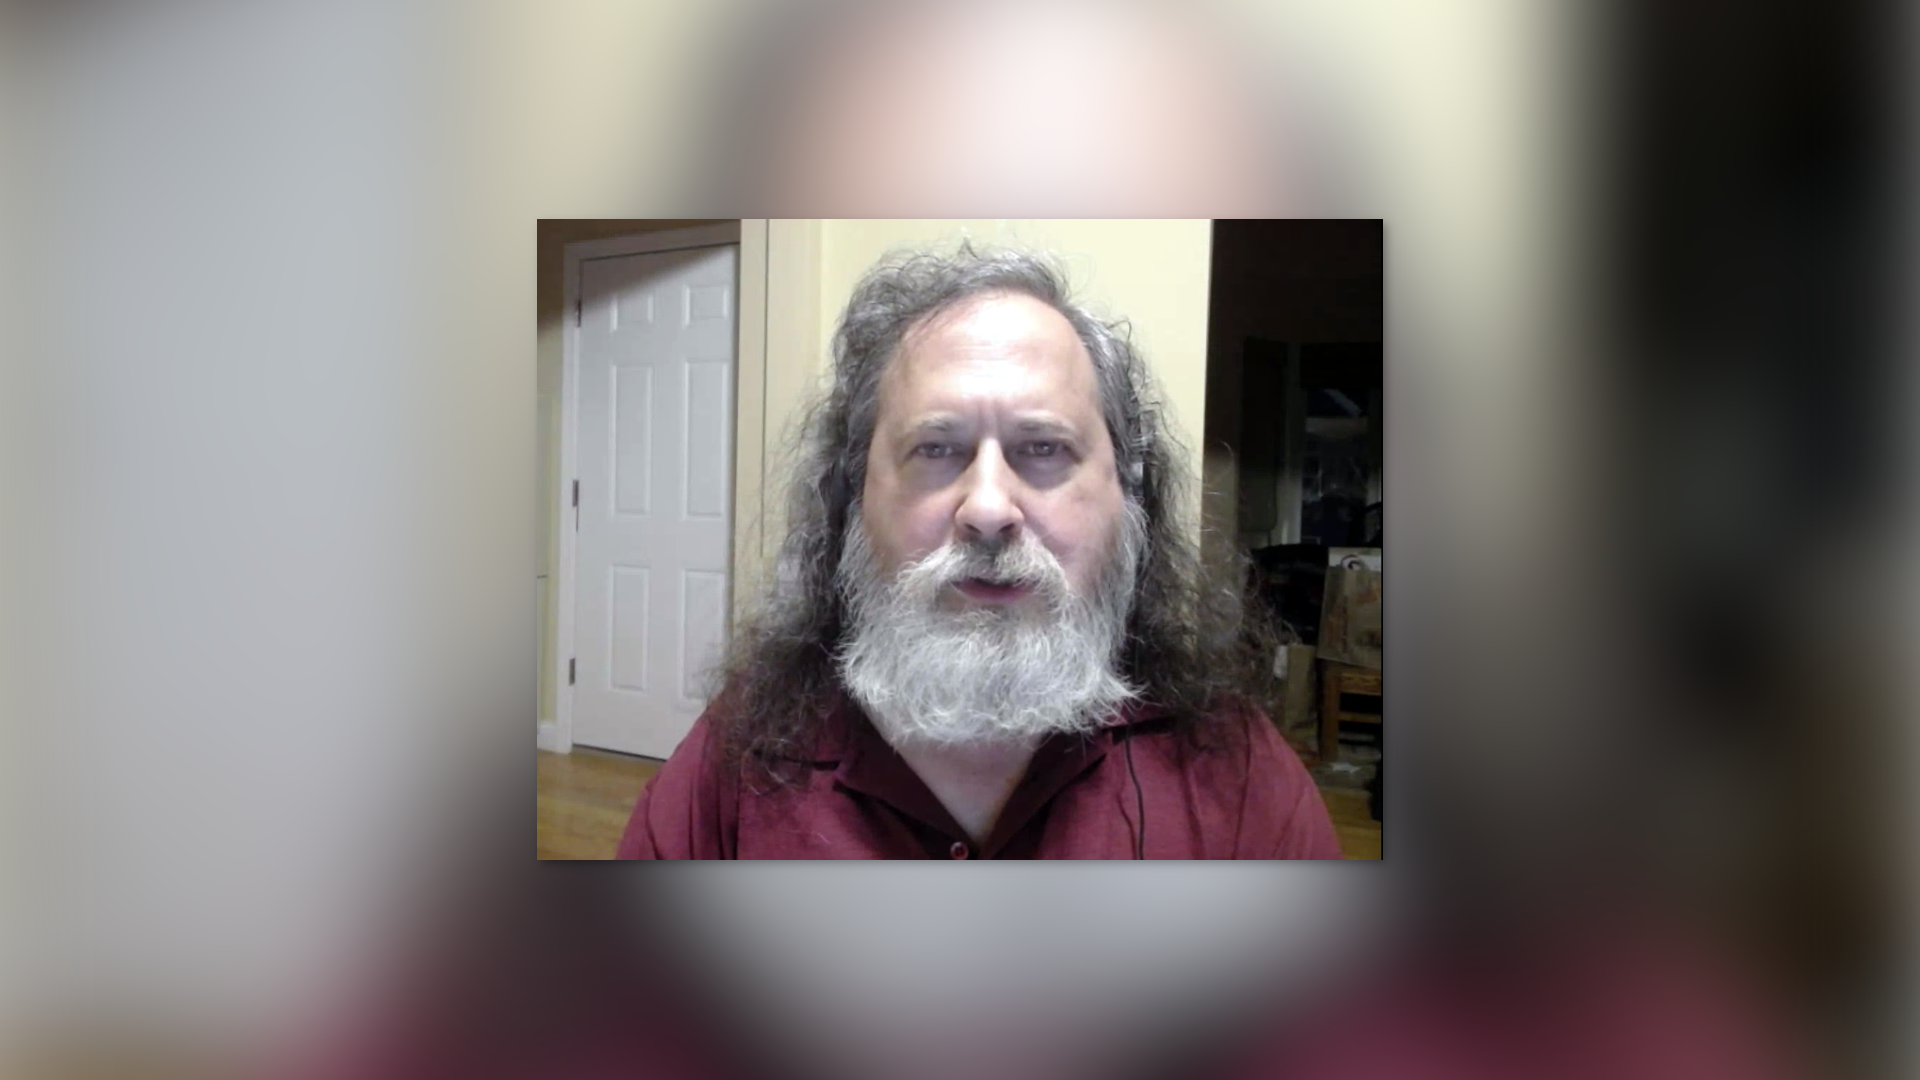 Response from Nadine Strossen to the slander campaign against Stallman.